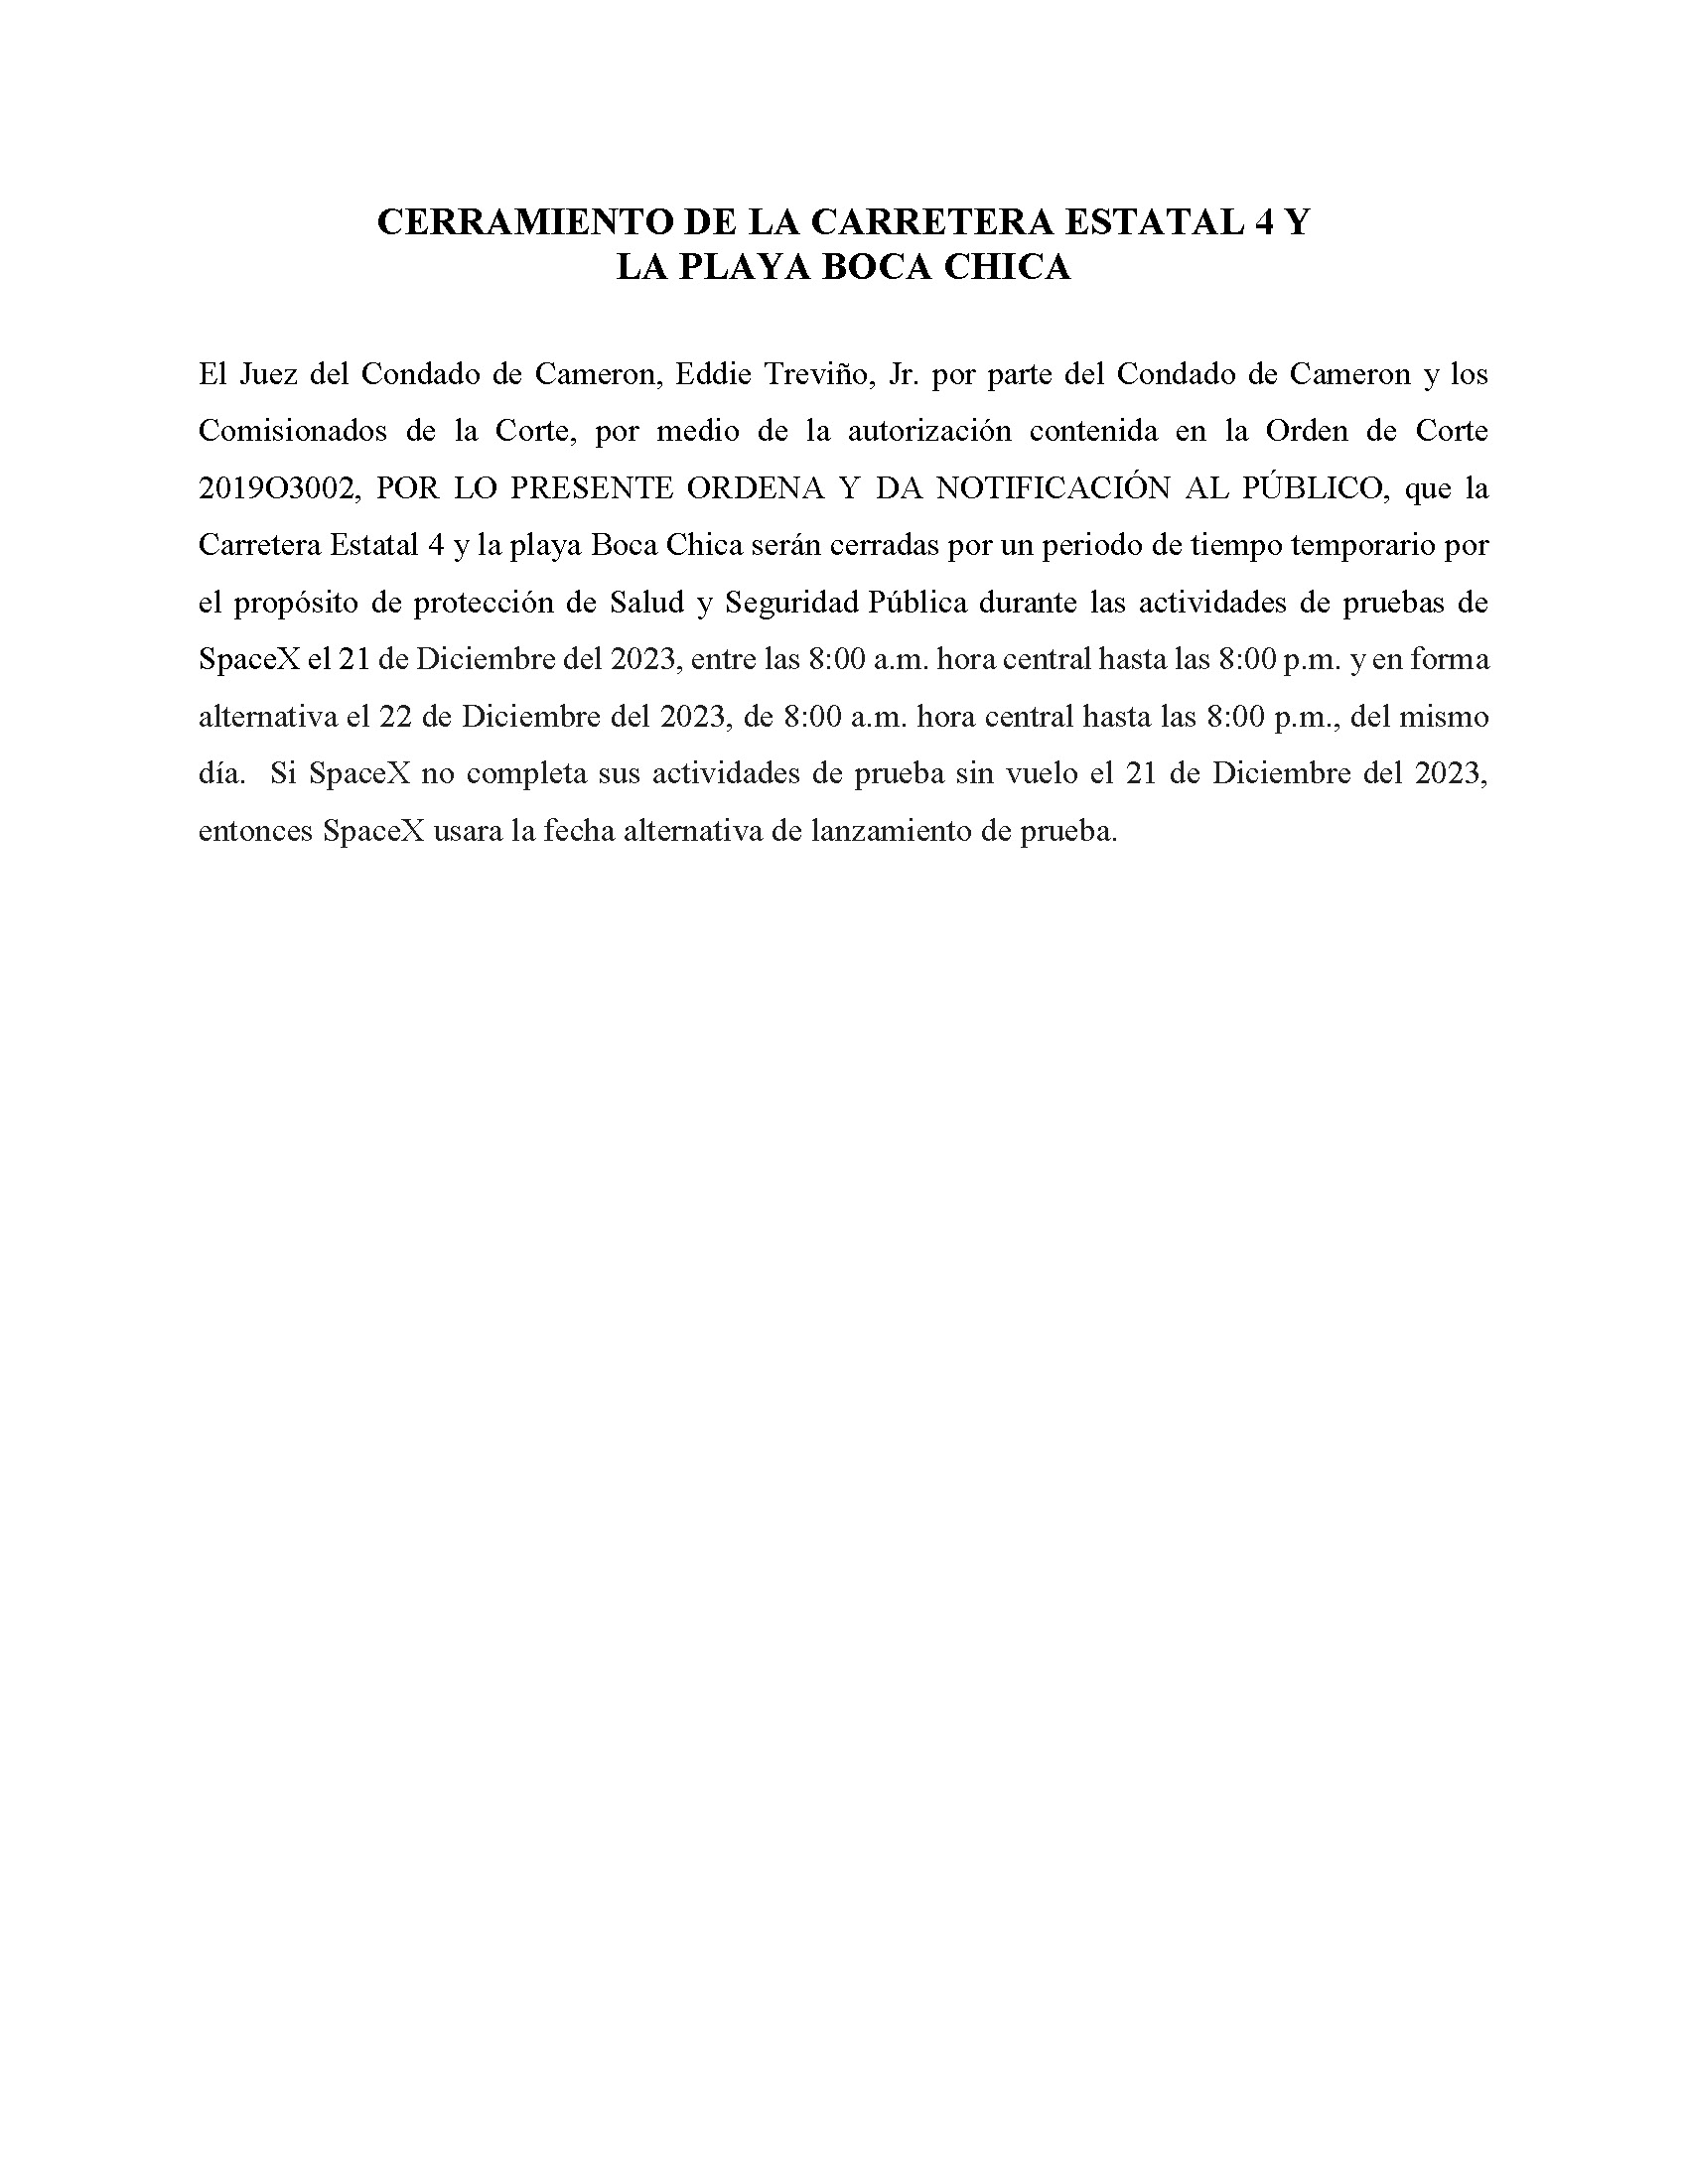 ORDER.CLOSURE OF HIGHWAY 4 Y LA PLAYA BOCA CHICA.SPANISH.12.21.23